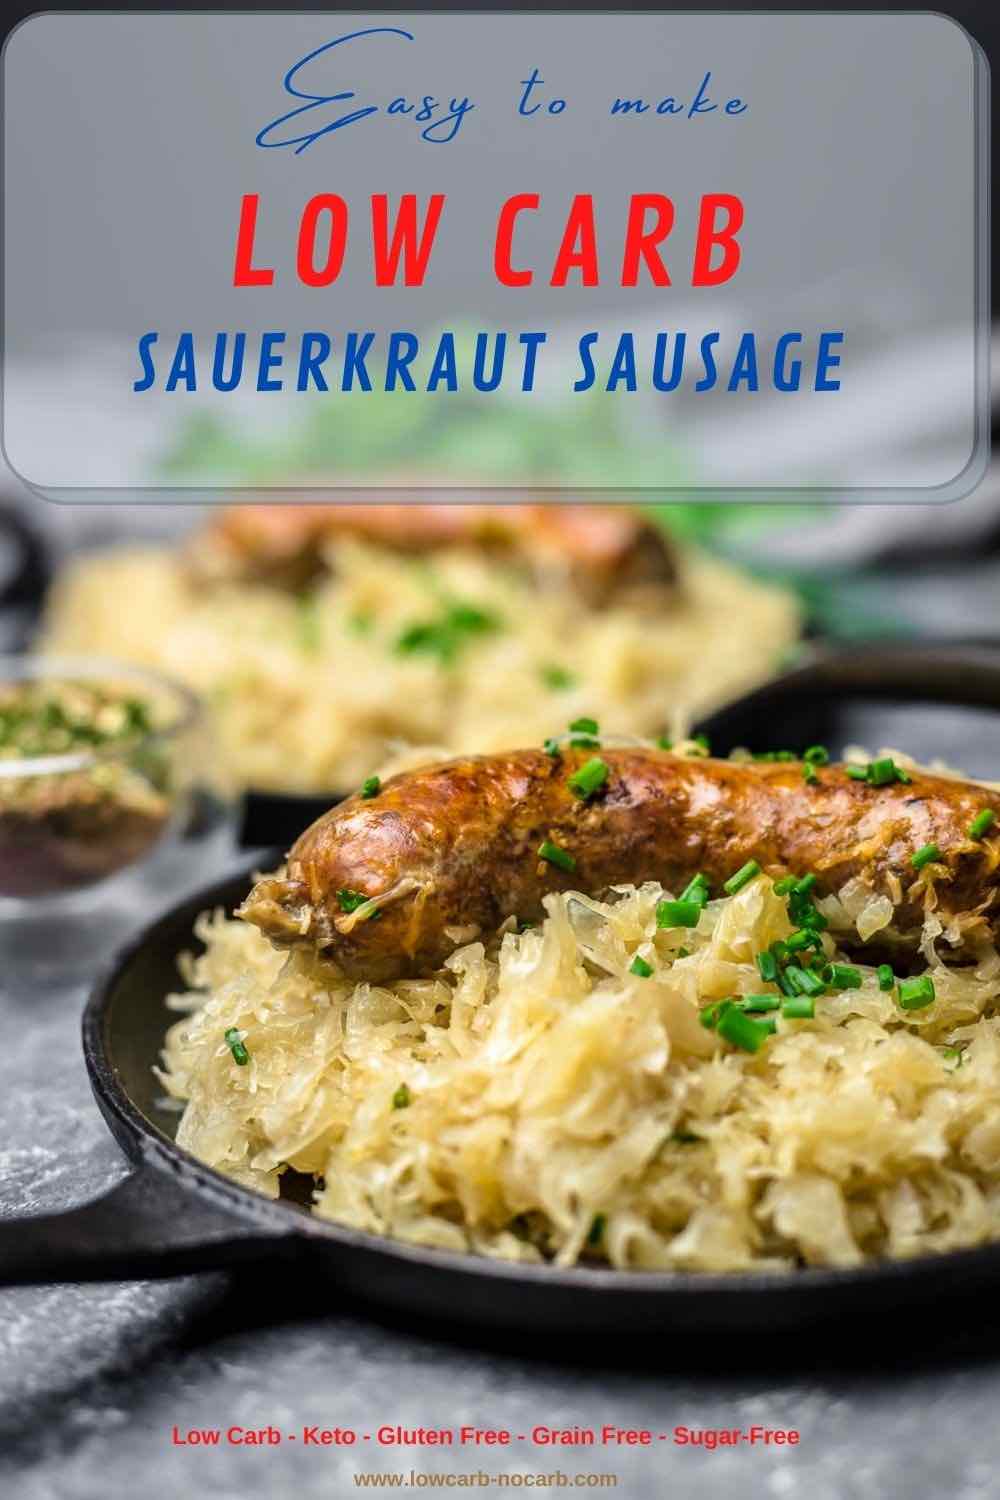 Sauerkraut and Sausage served inside cast iron.